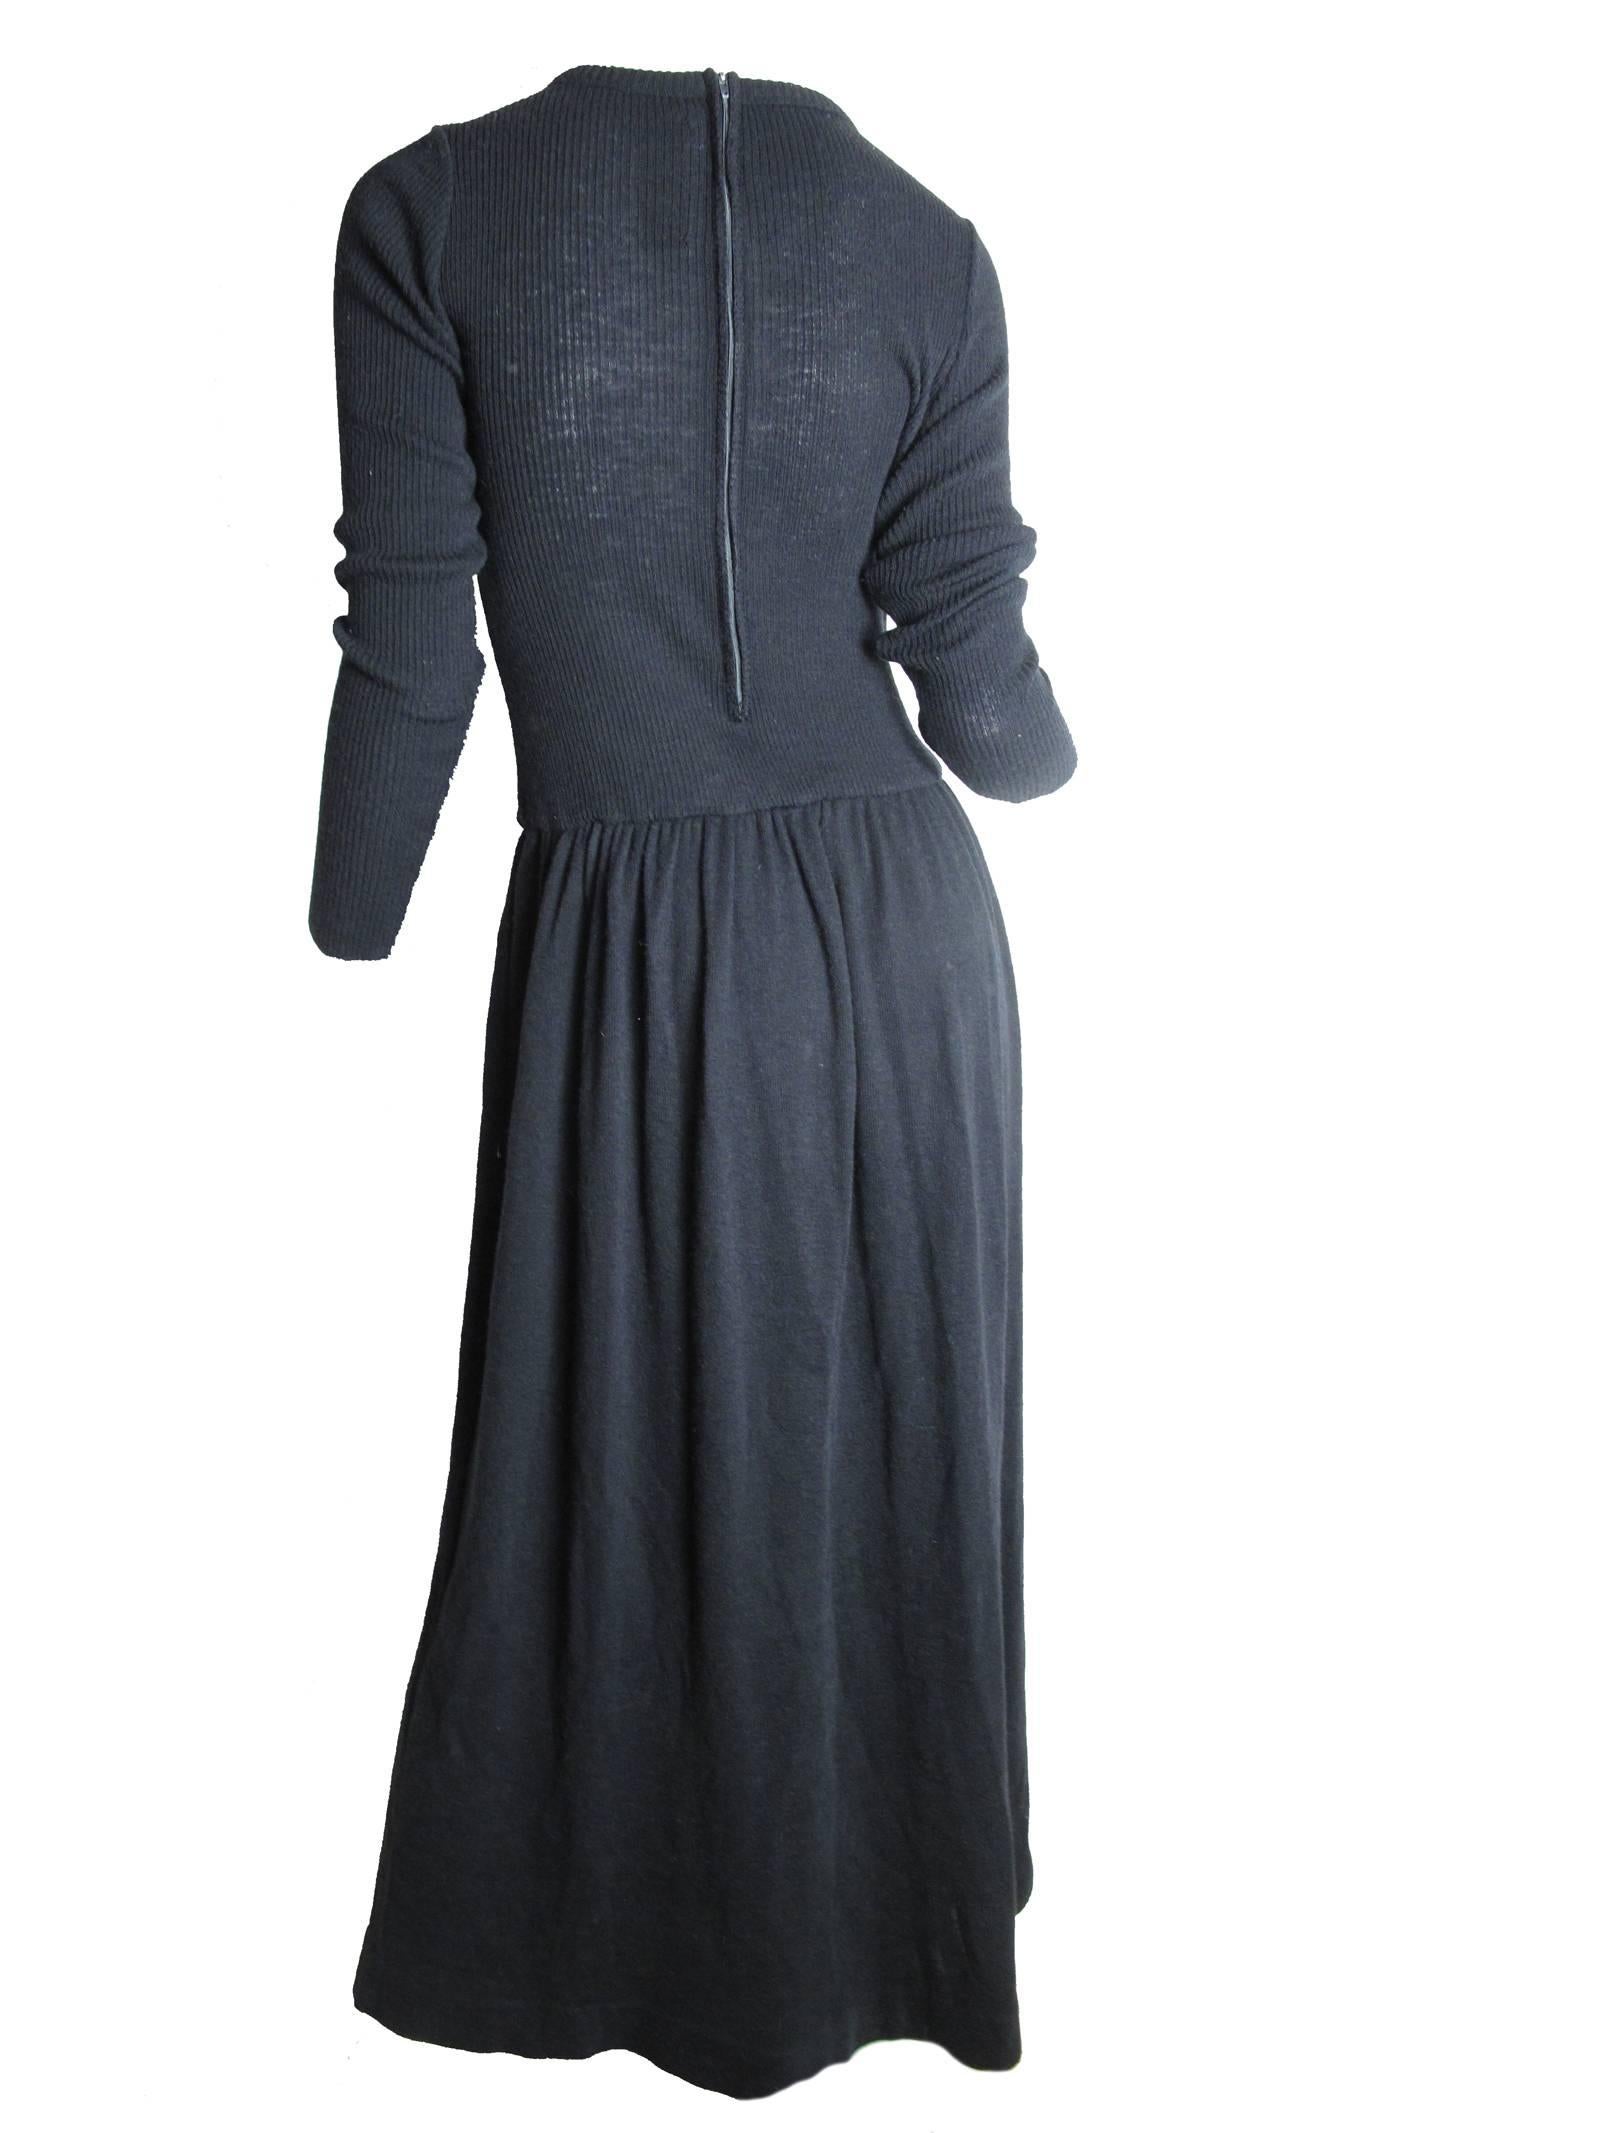 Women's Mollie Parnis Long Black Knit Dress, 1970s